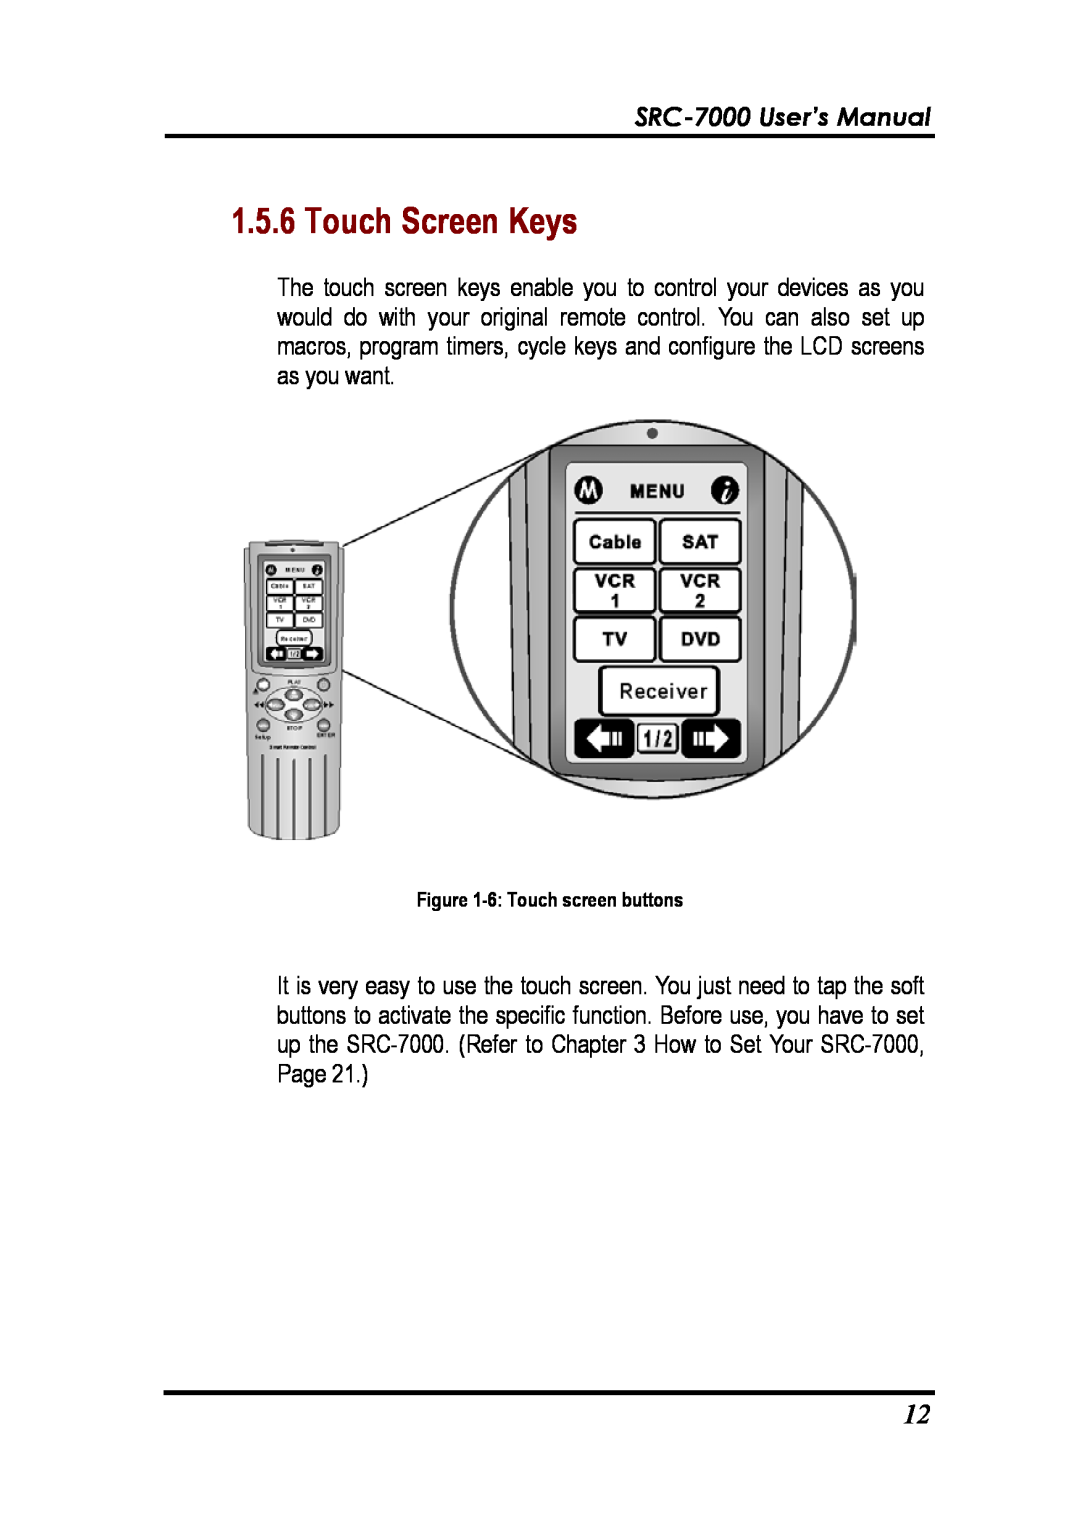 Sunwave Tech manual Touch Screen Keys, SRC-7000 User’s Manual, 6 Touch screen buttons 